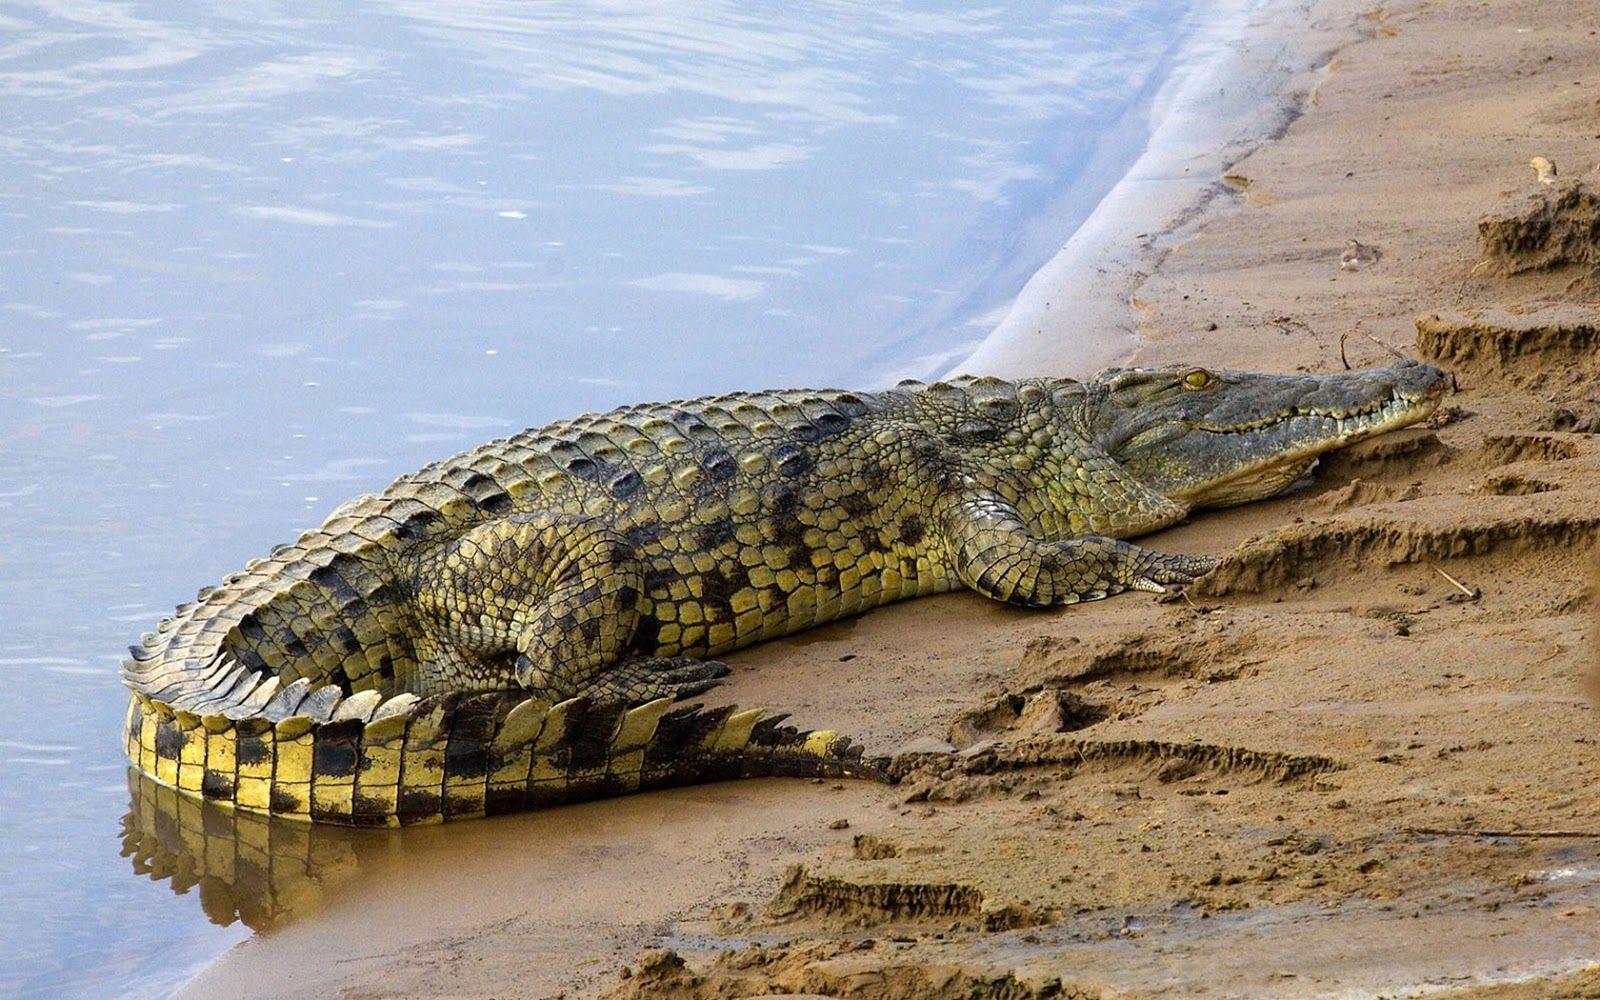 Animals Nile crocodile Image